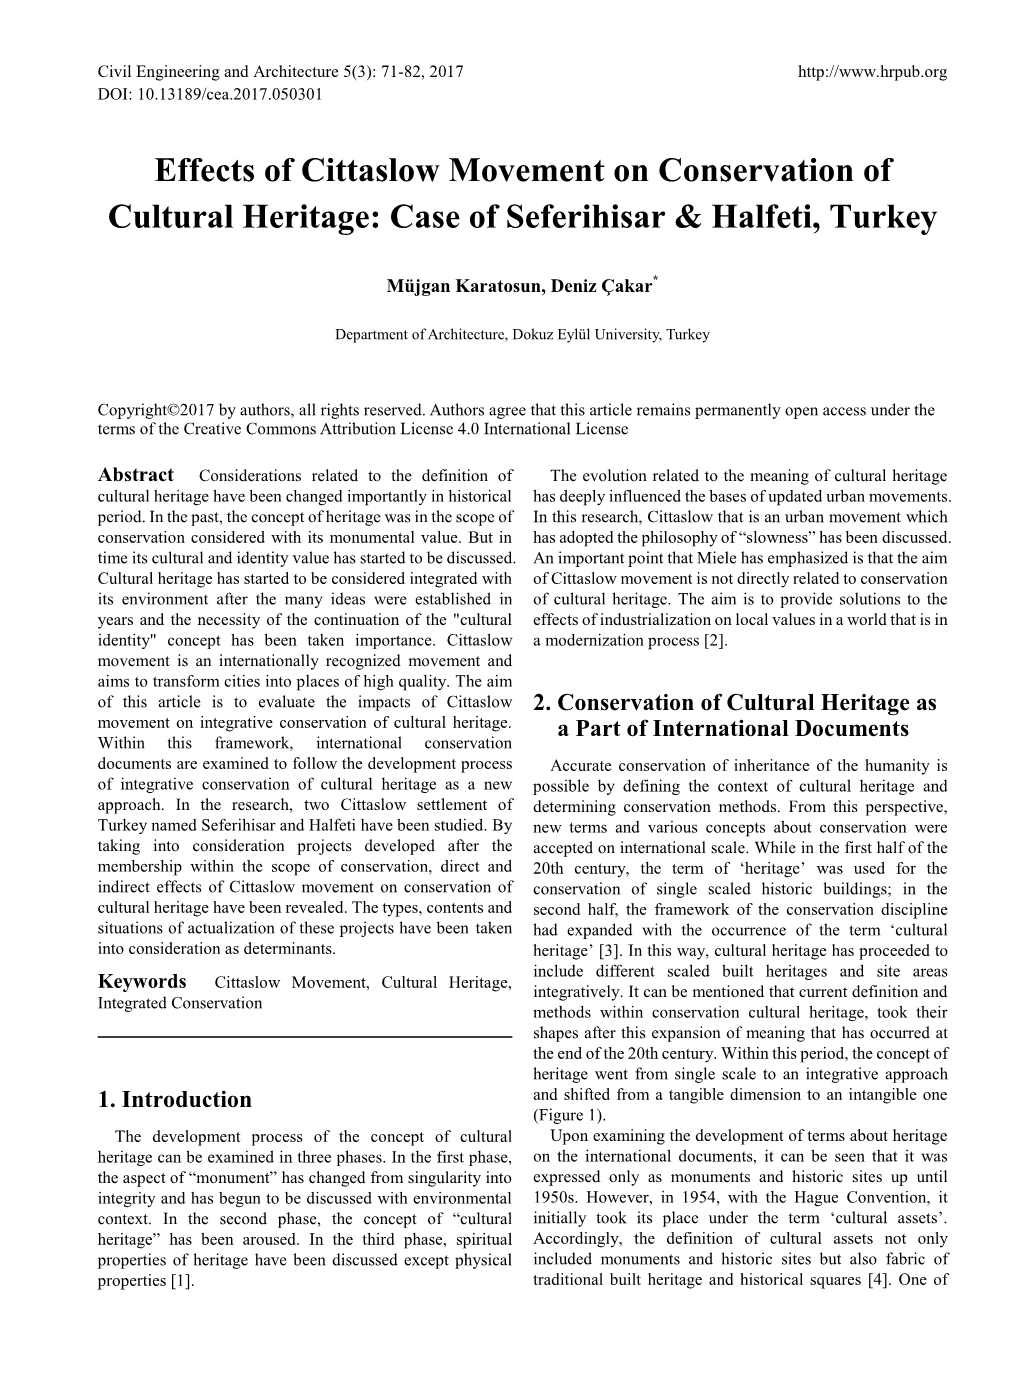 Effects of Cittaslow Movement on Conservation of Cultural Heritage: Case of Seferihisar & Halfeti, Turkey